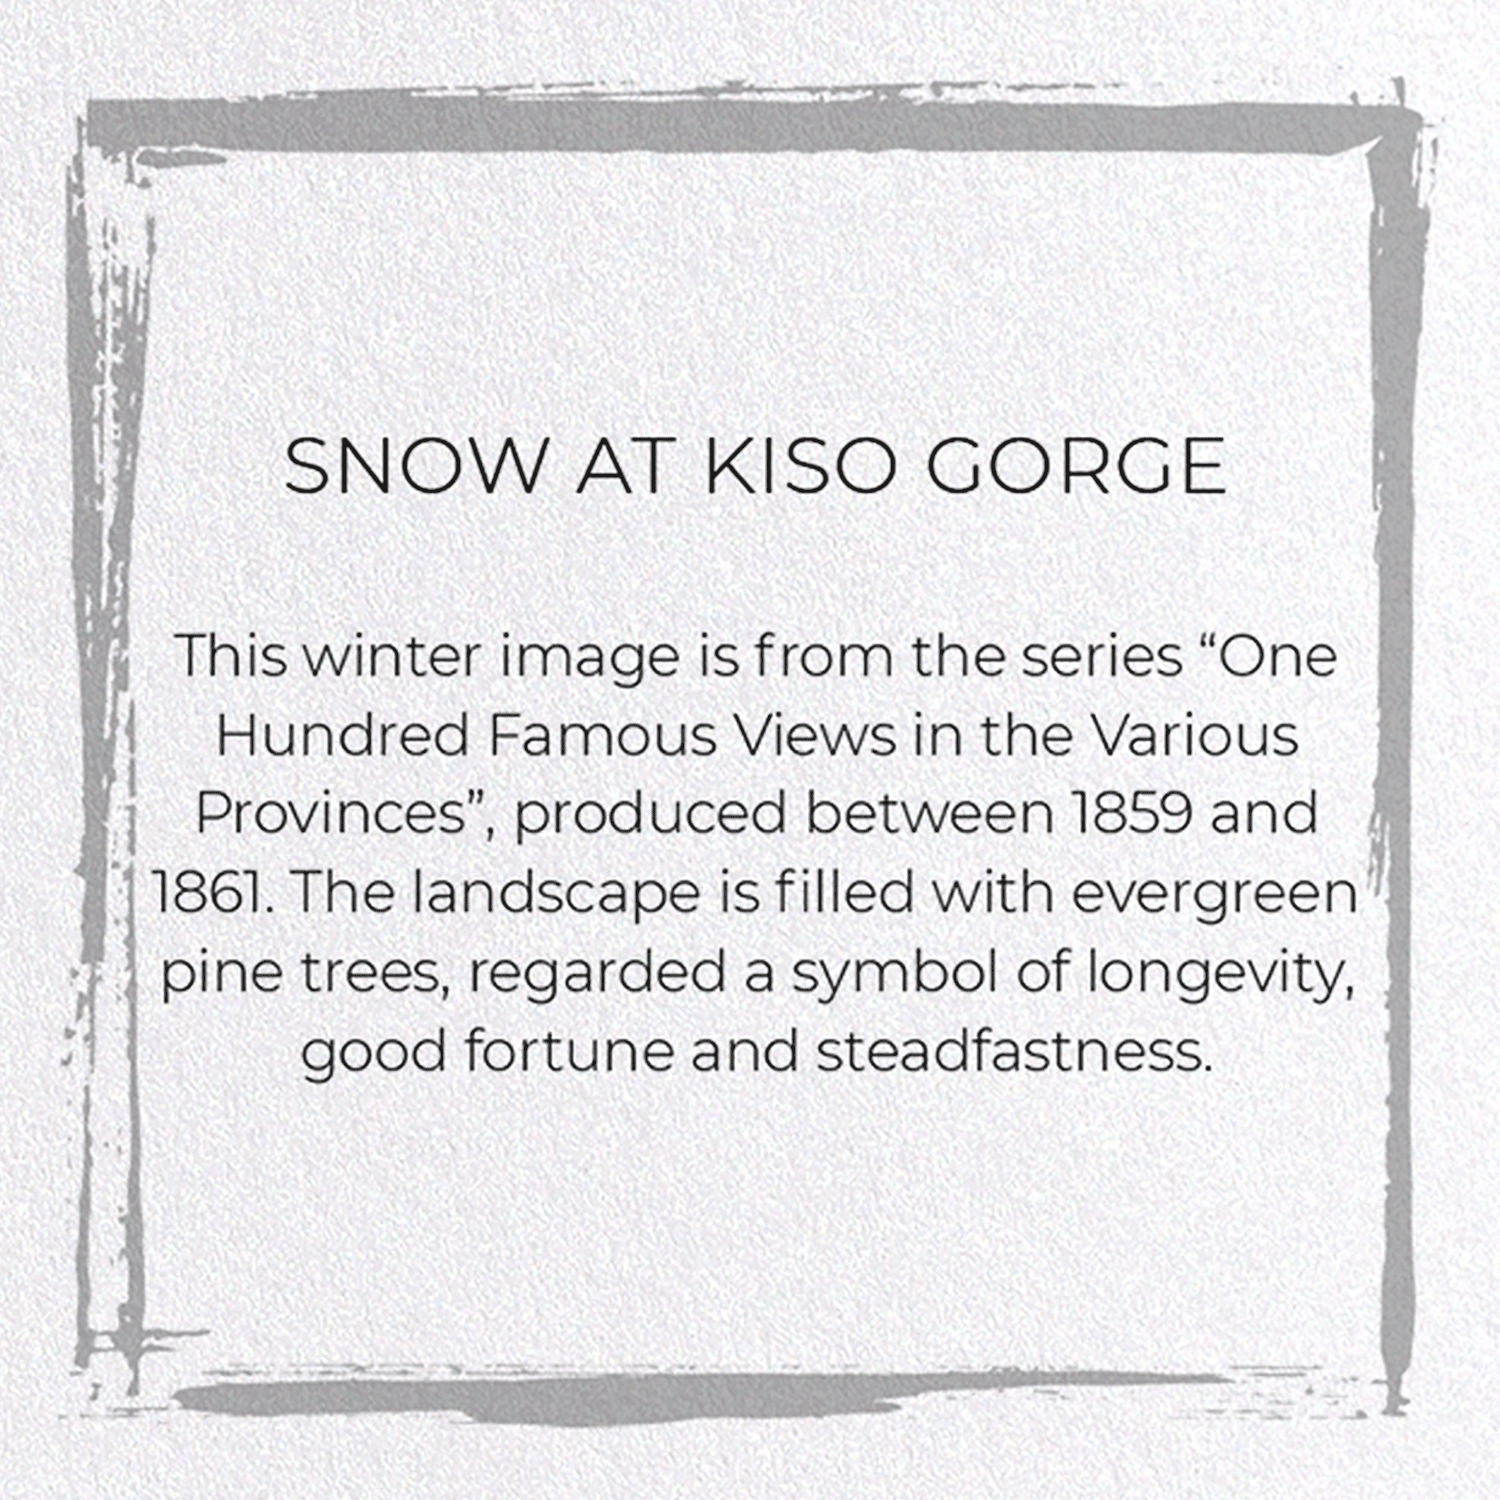 SNOW AT KISO GORGE